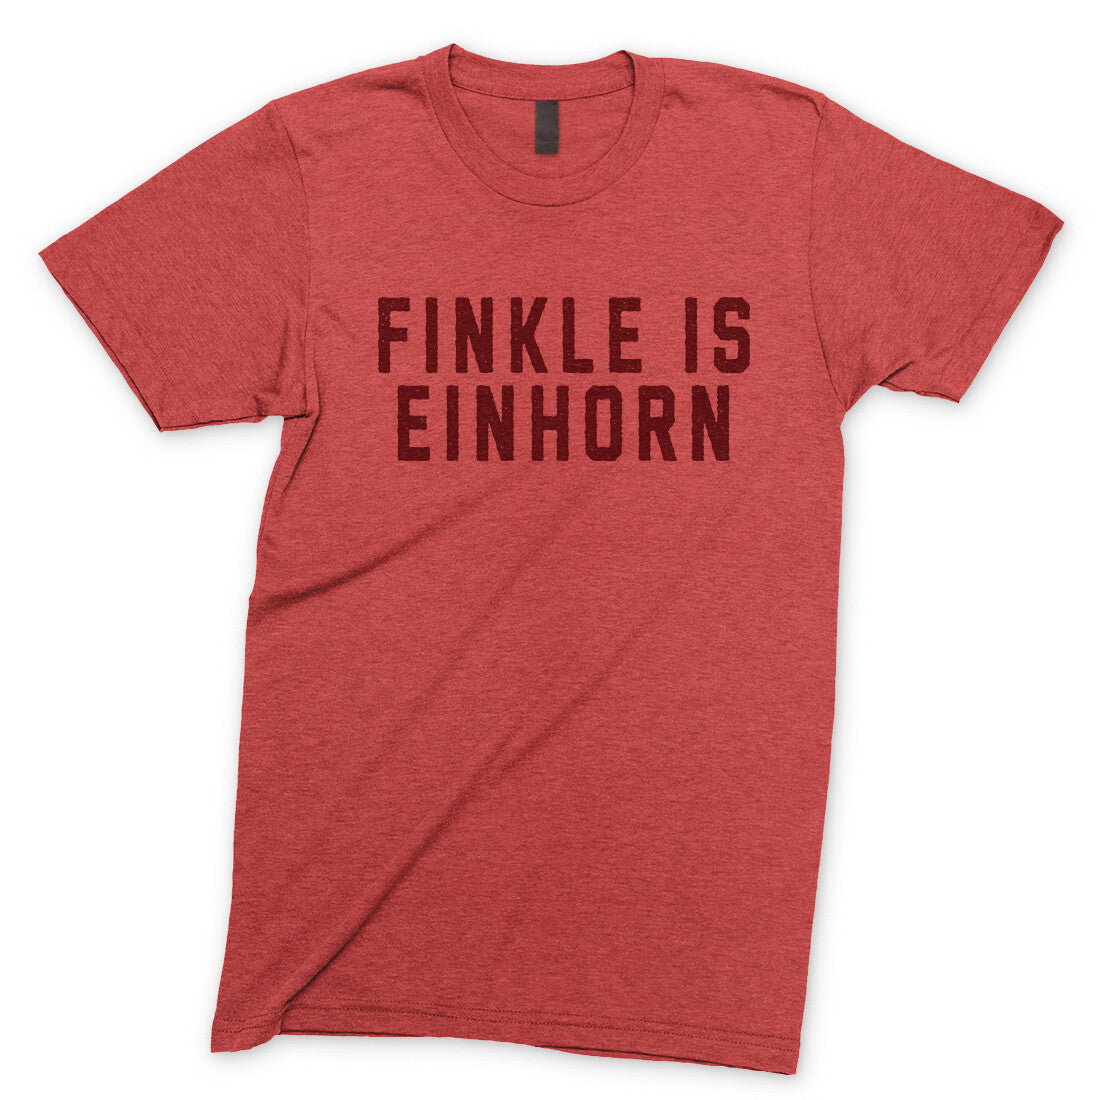 Finkle is Einhorn in Heather Red Color